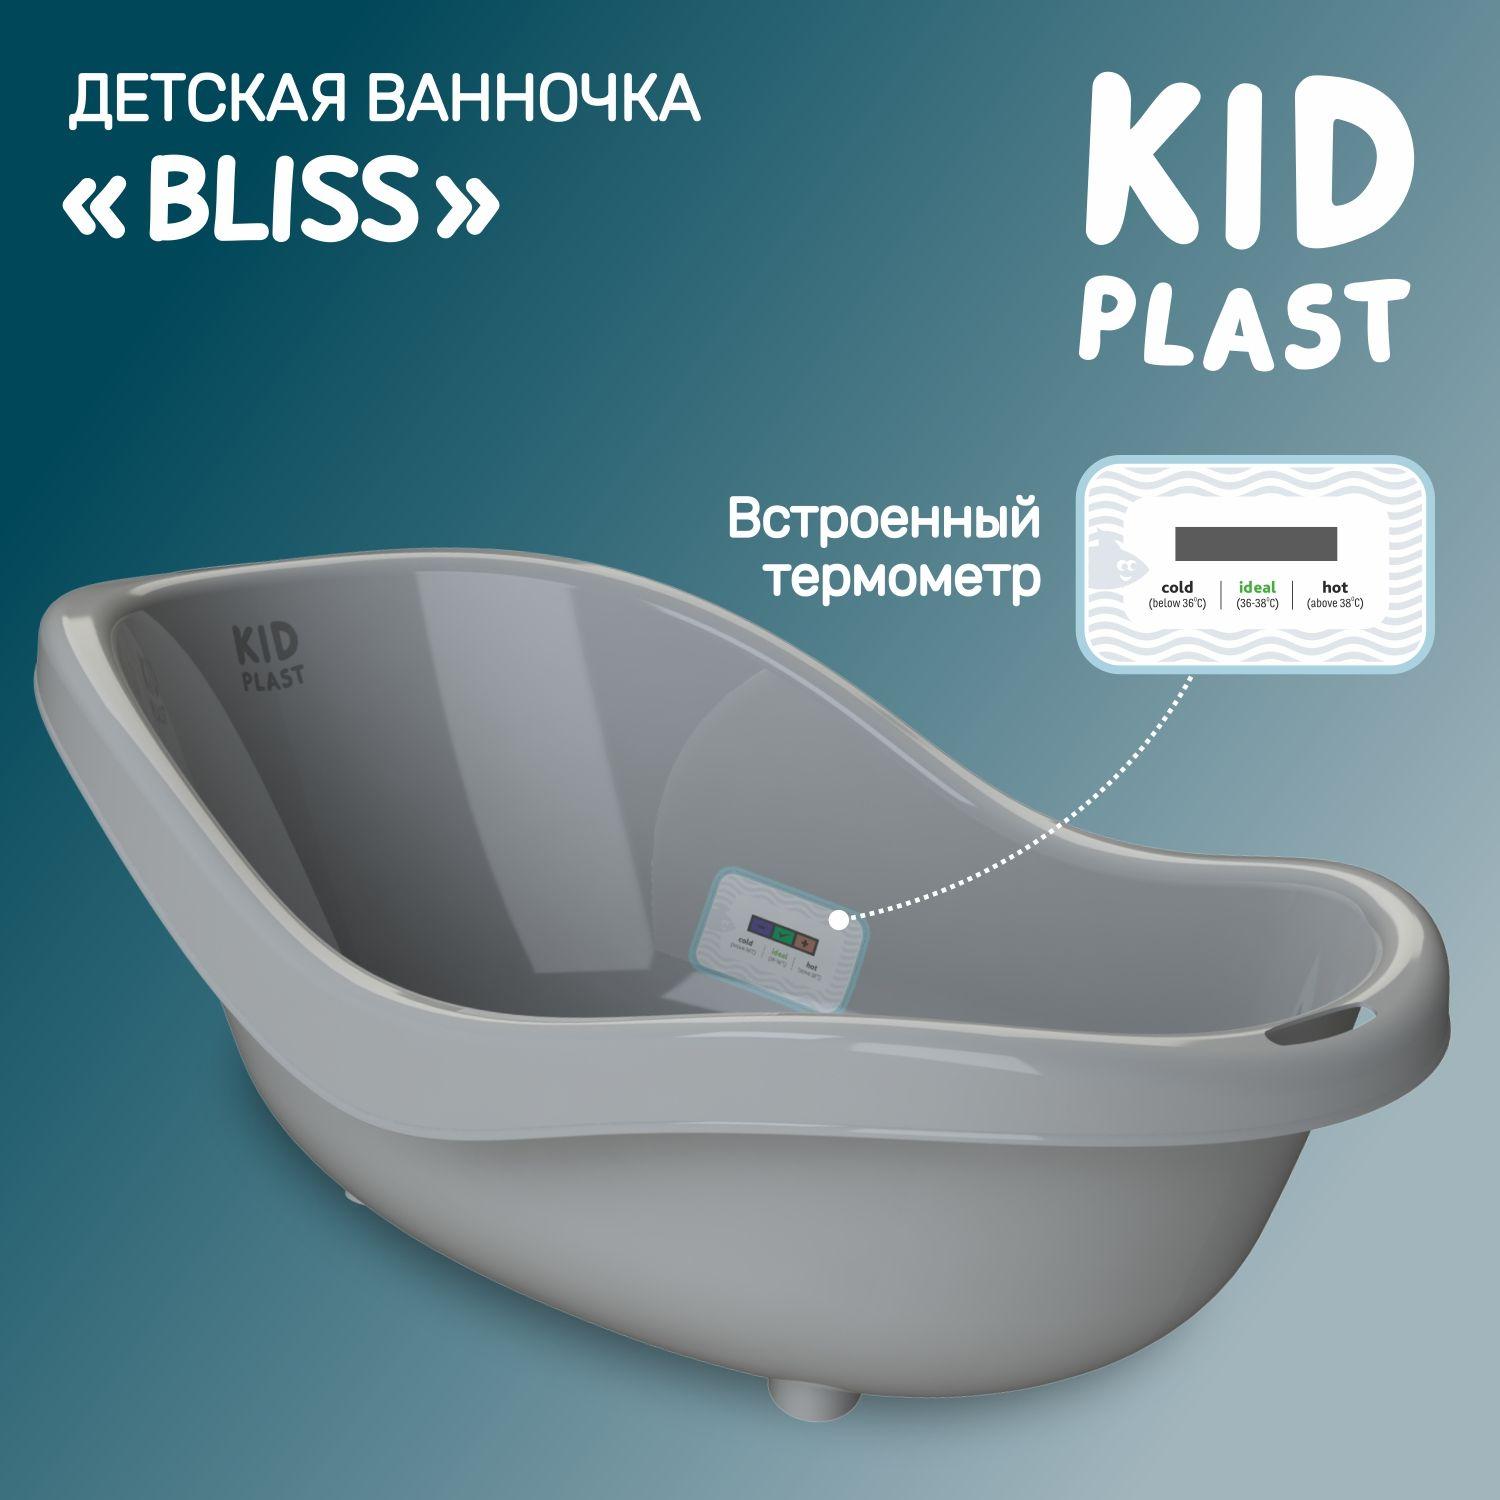 Ванночка для новорожденных "Bliss", KidPlast